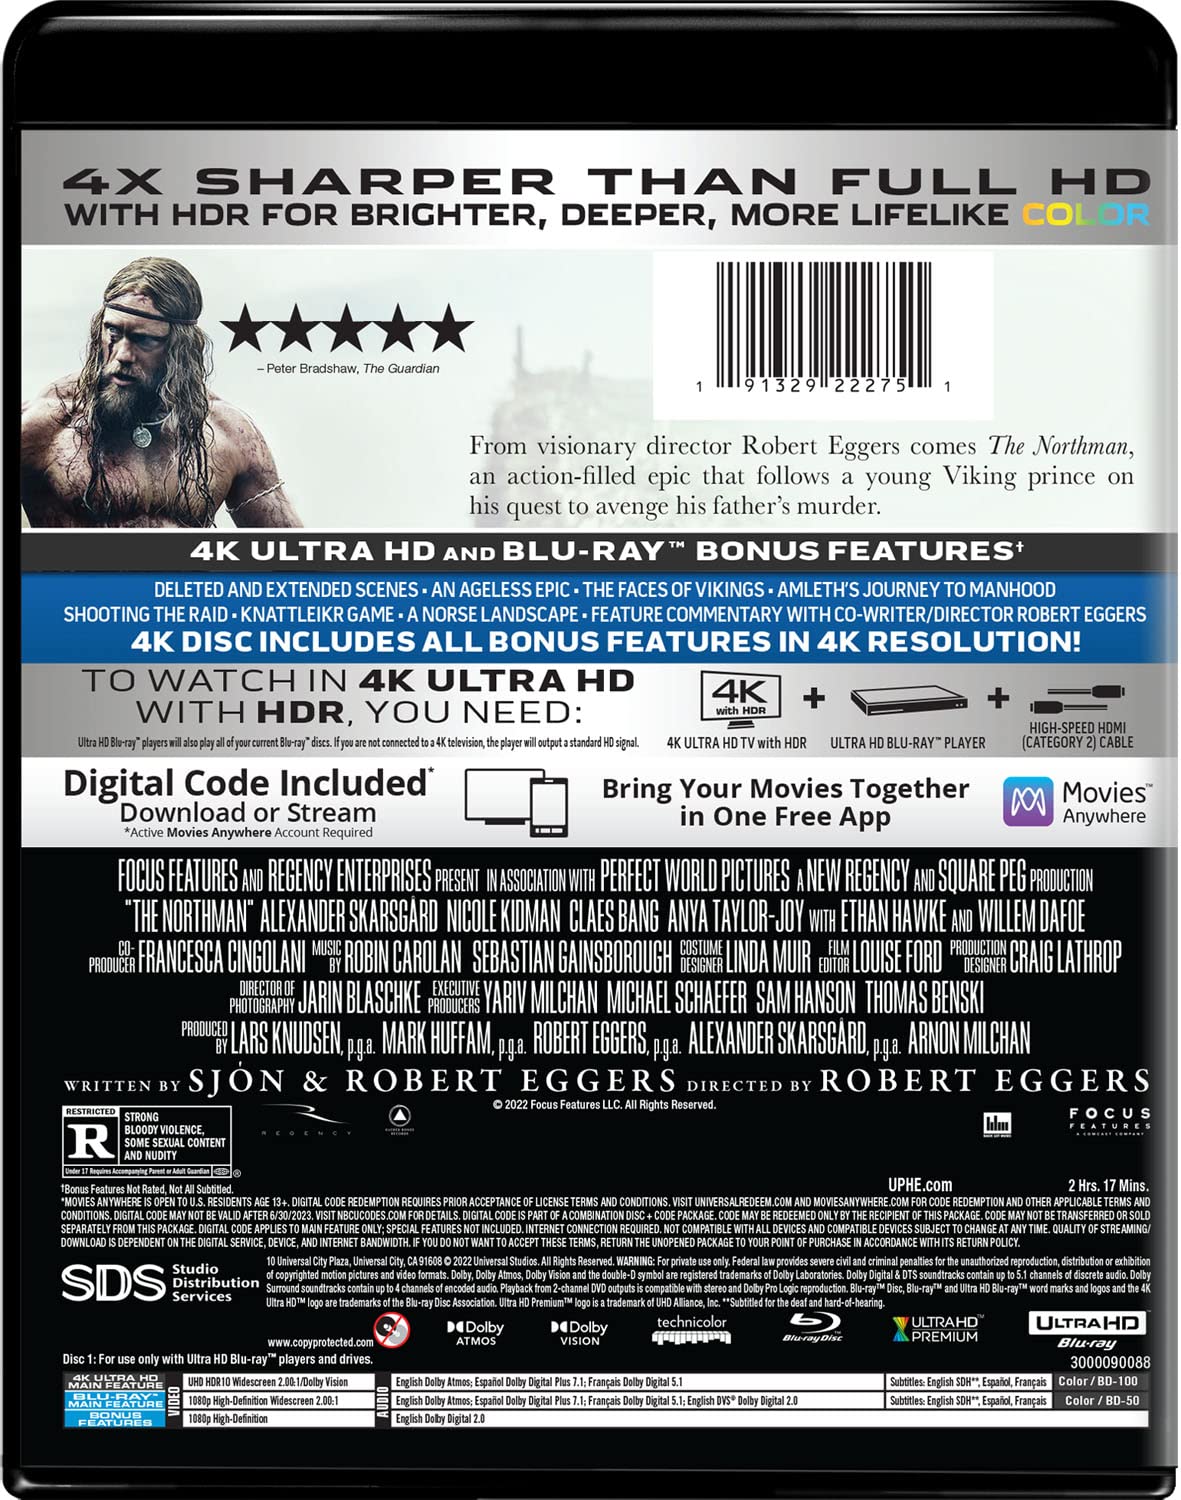 The Northman 4k Blu-ray Collectors Edition back